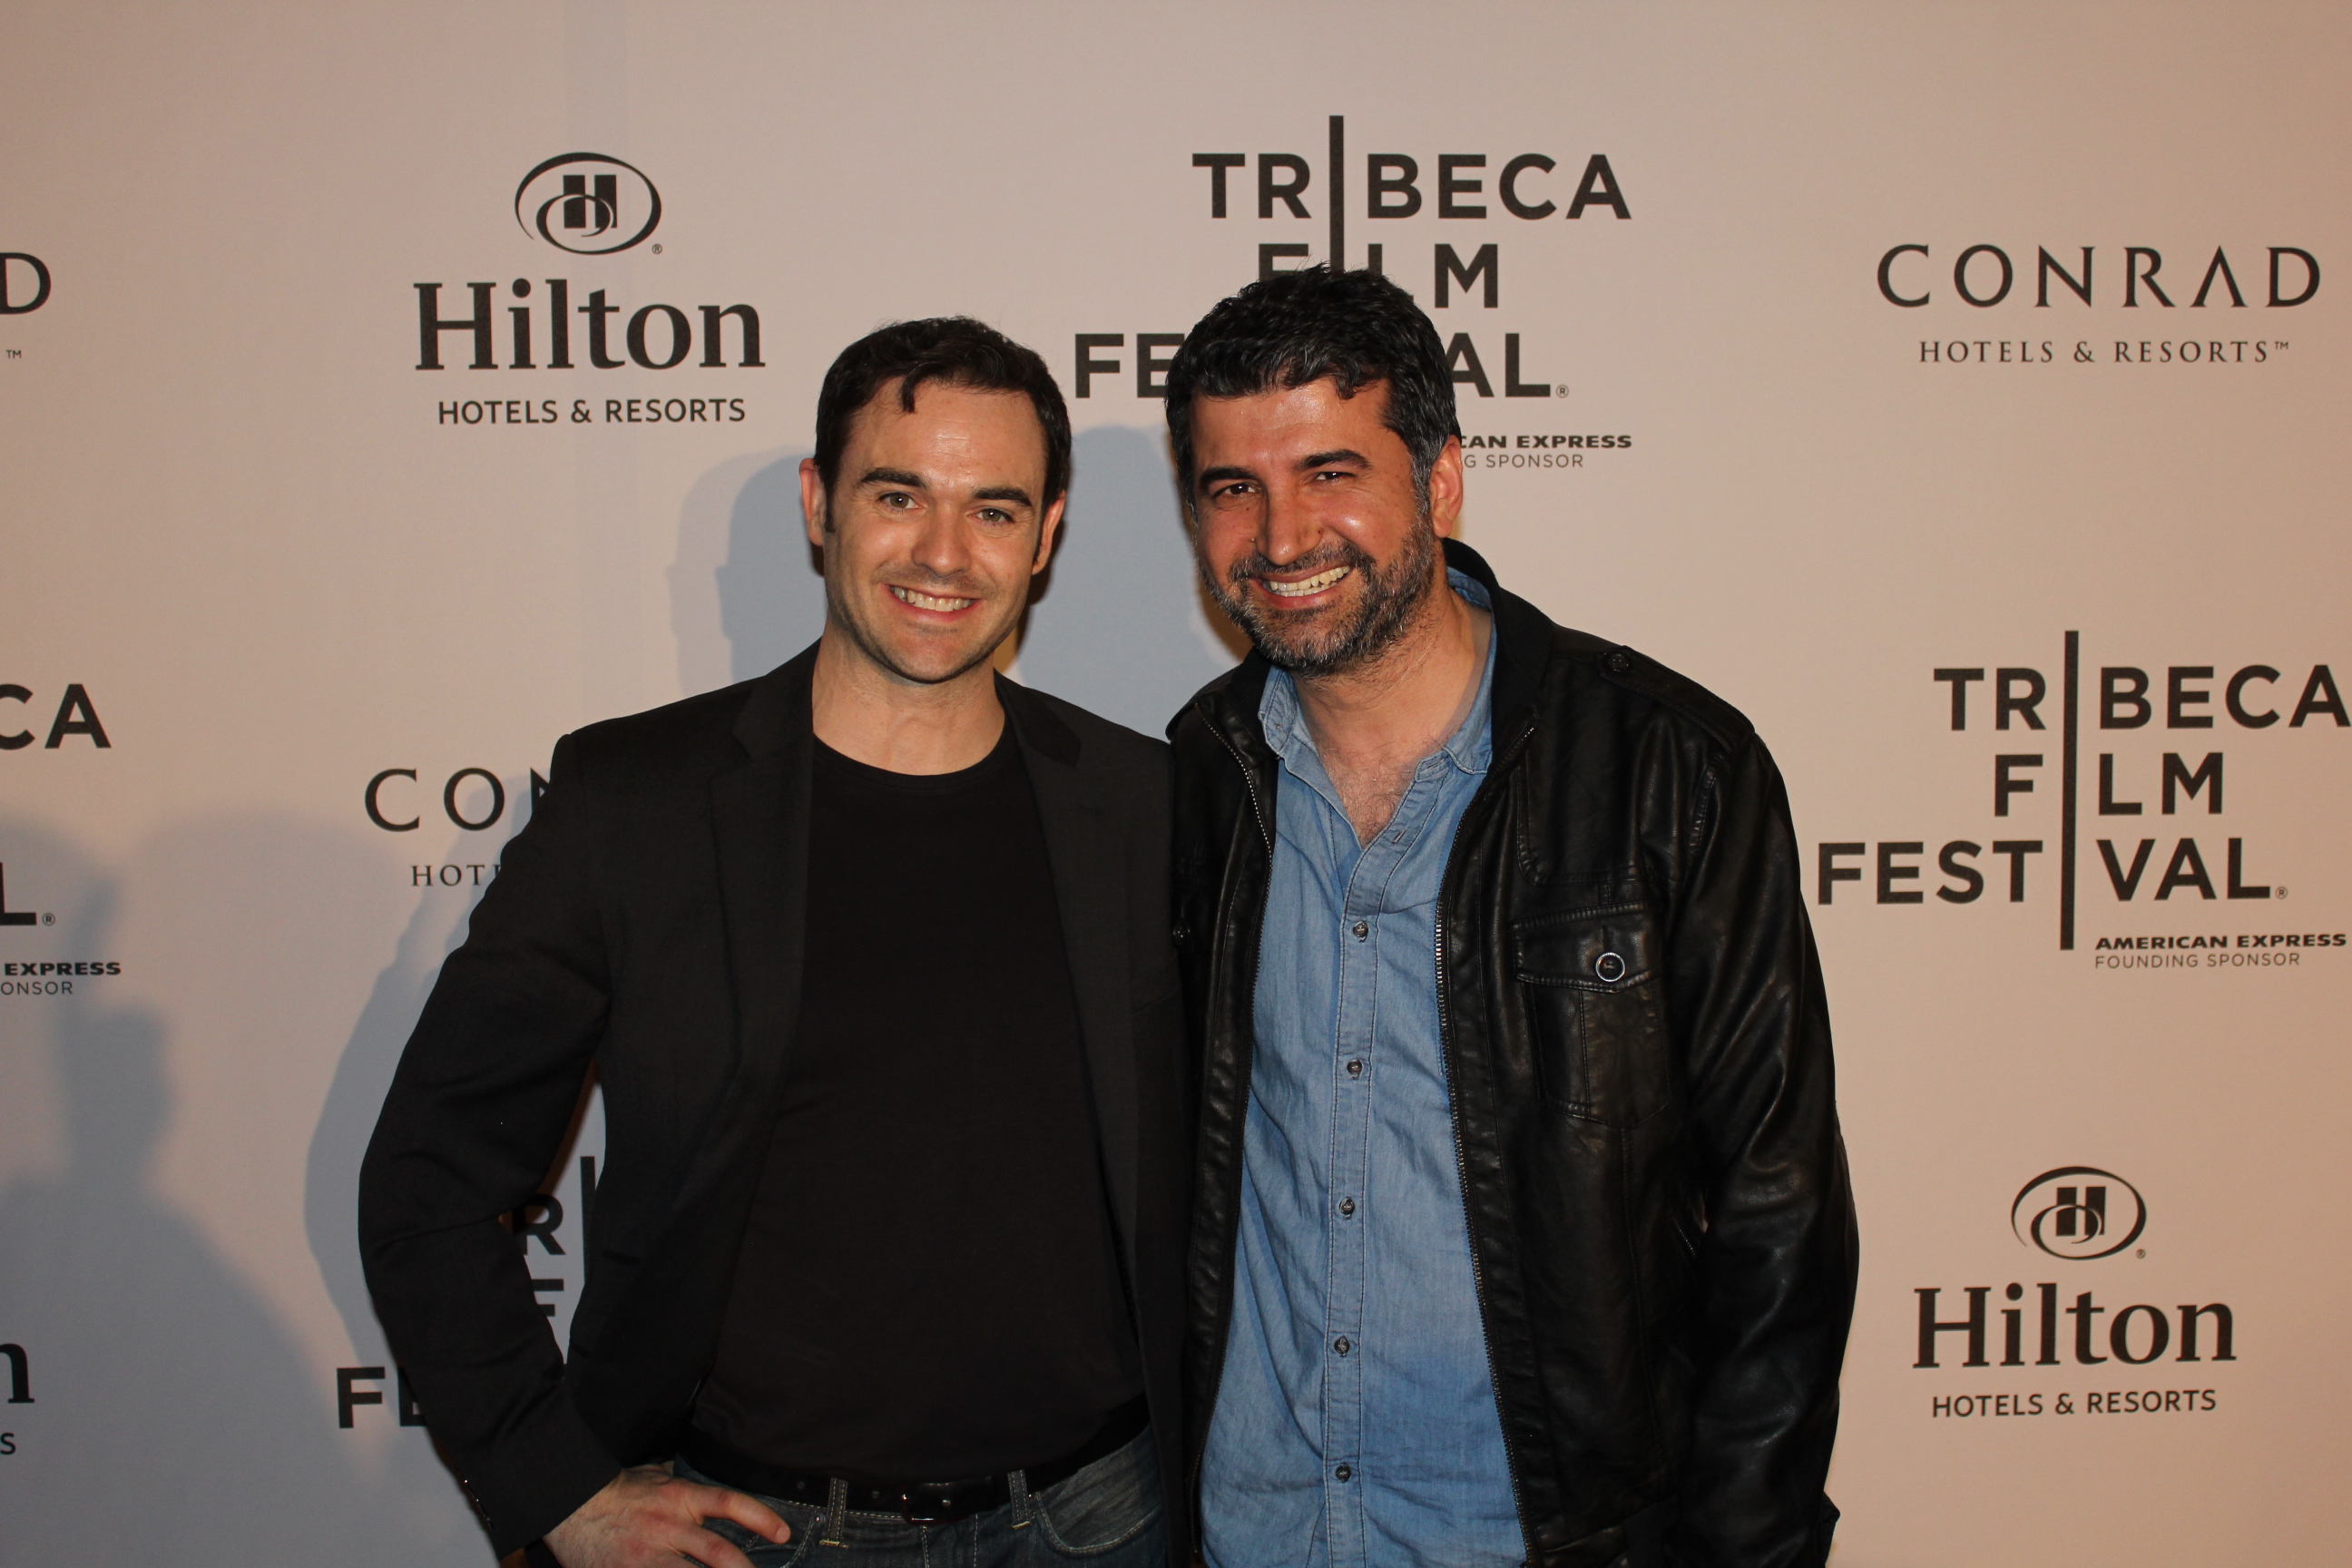 Rich Devaney poses with Hisham Zamam at the 2012 Tribeca Film Festival